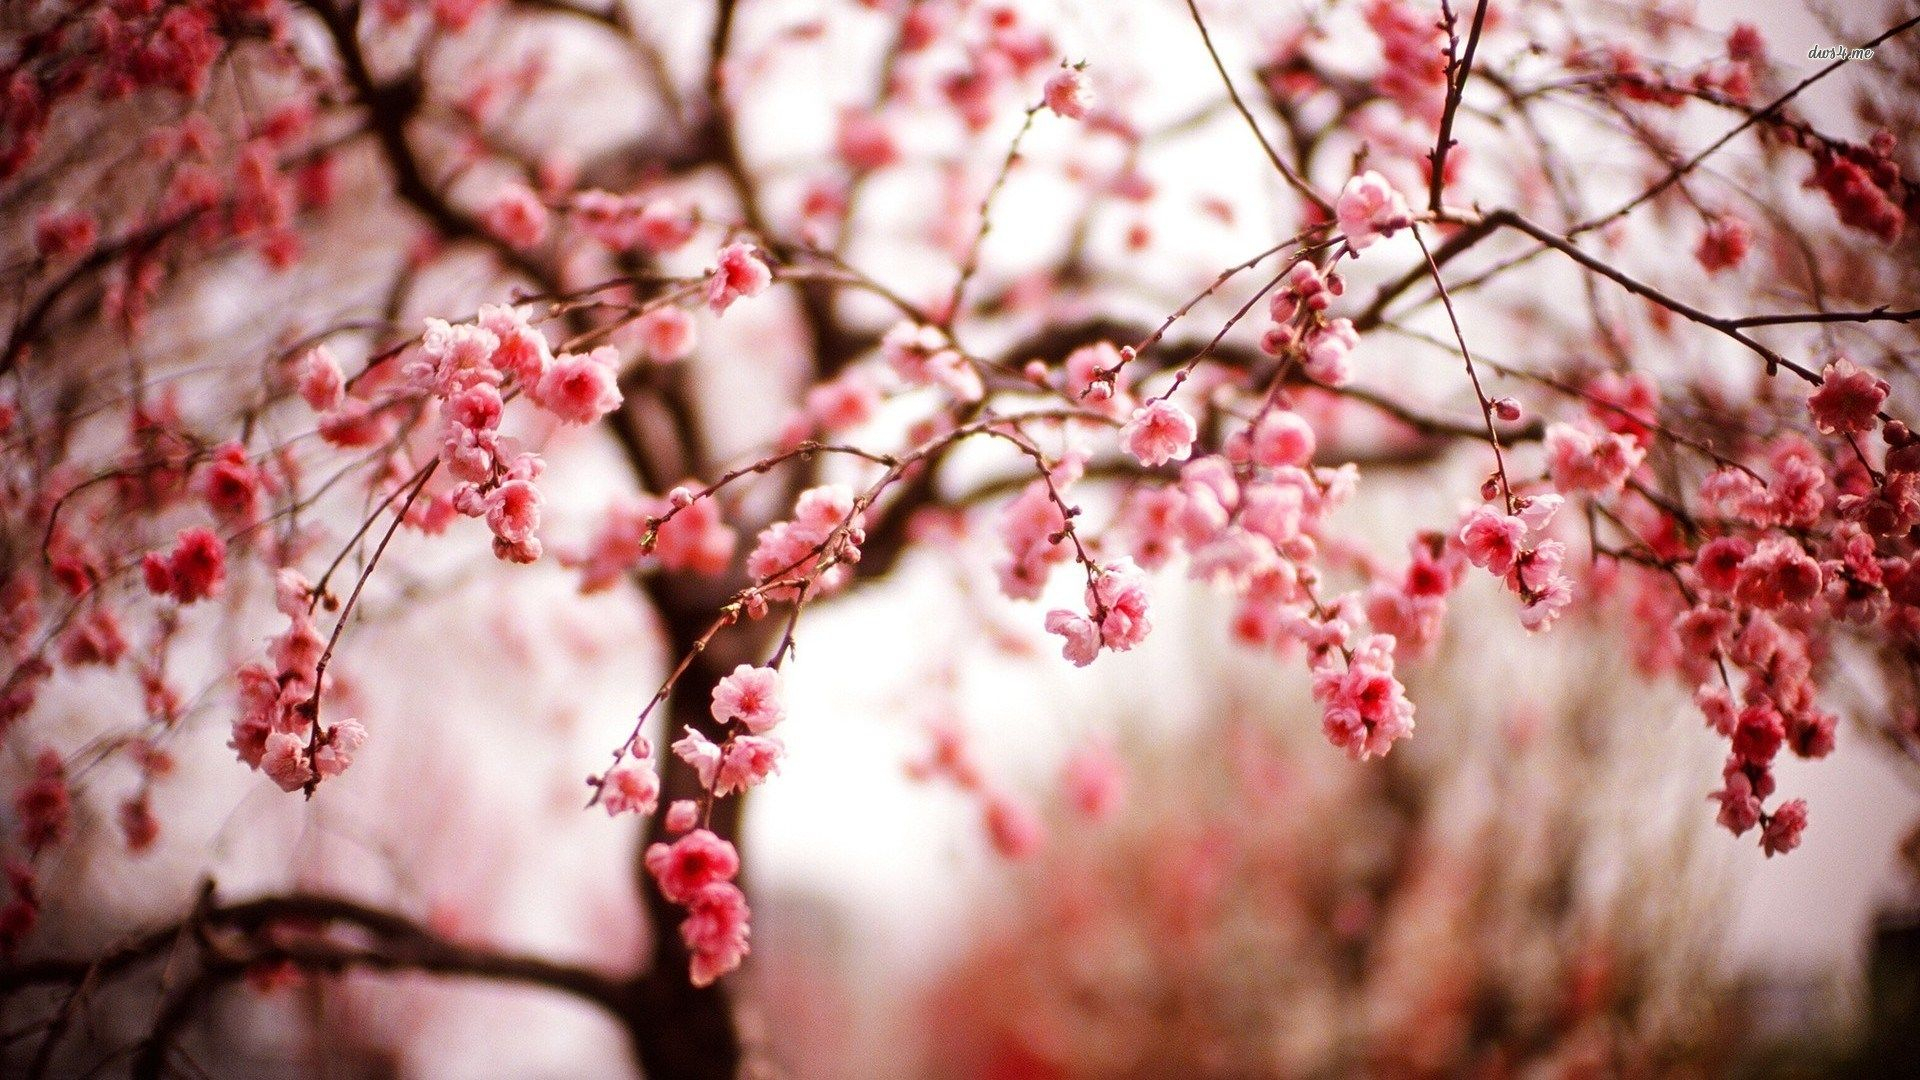 1920x1080 cherry blossom free desktop wallpaper | Cherry blossom wallpaper, Spring flowers wallpaper, Blossom trees